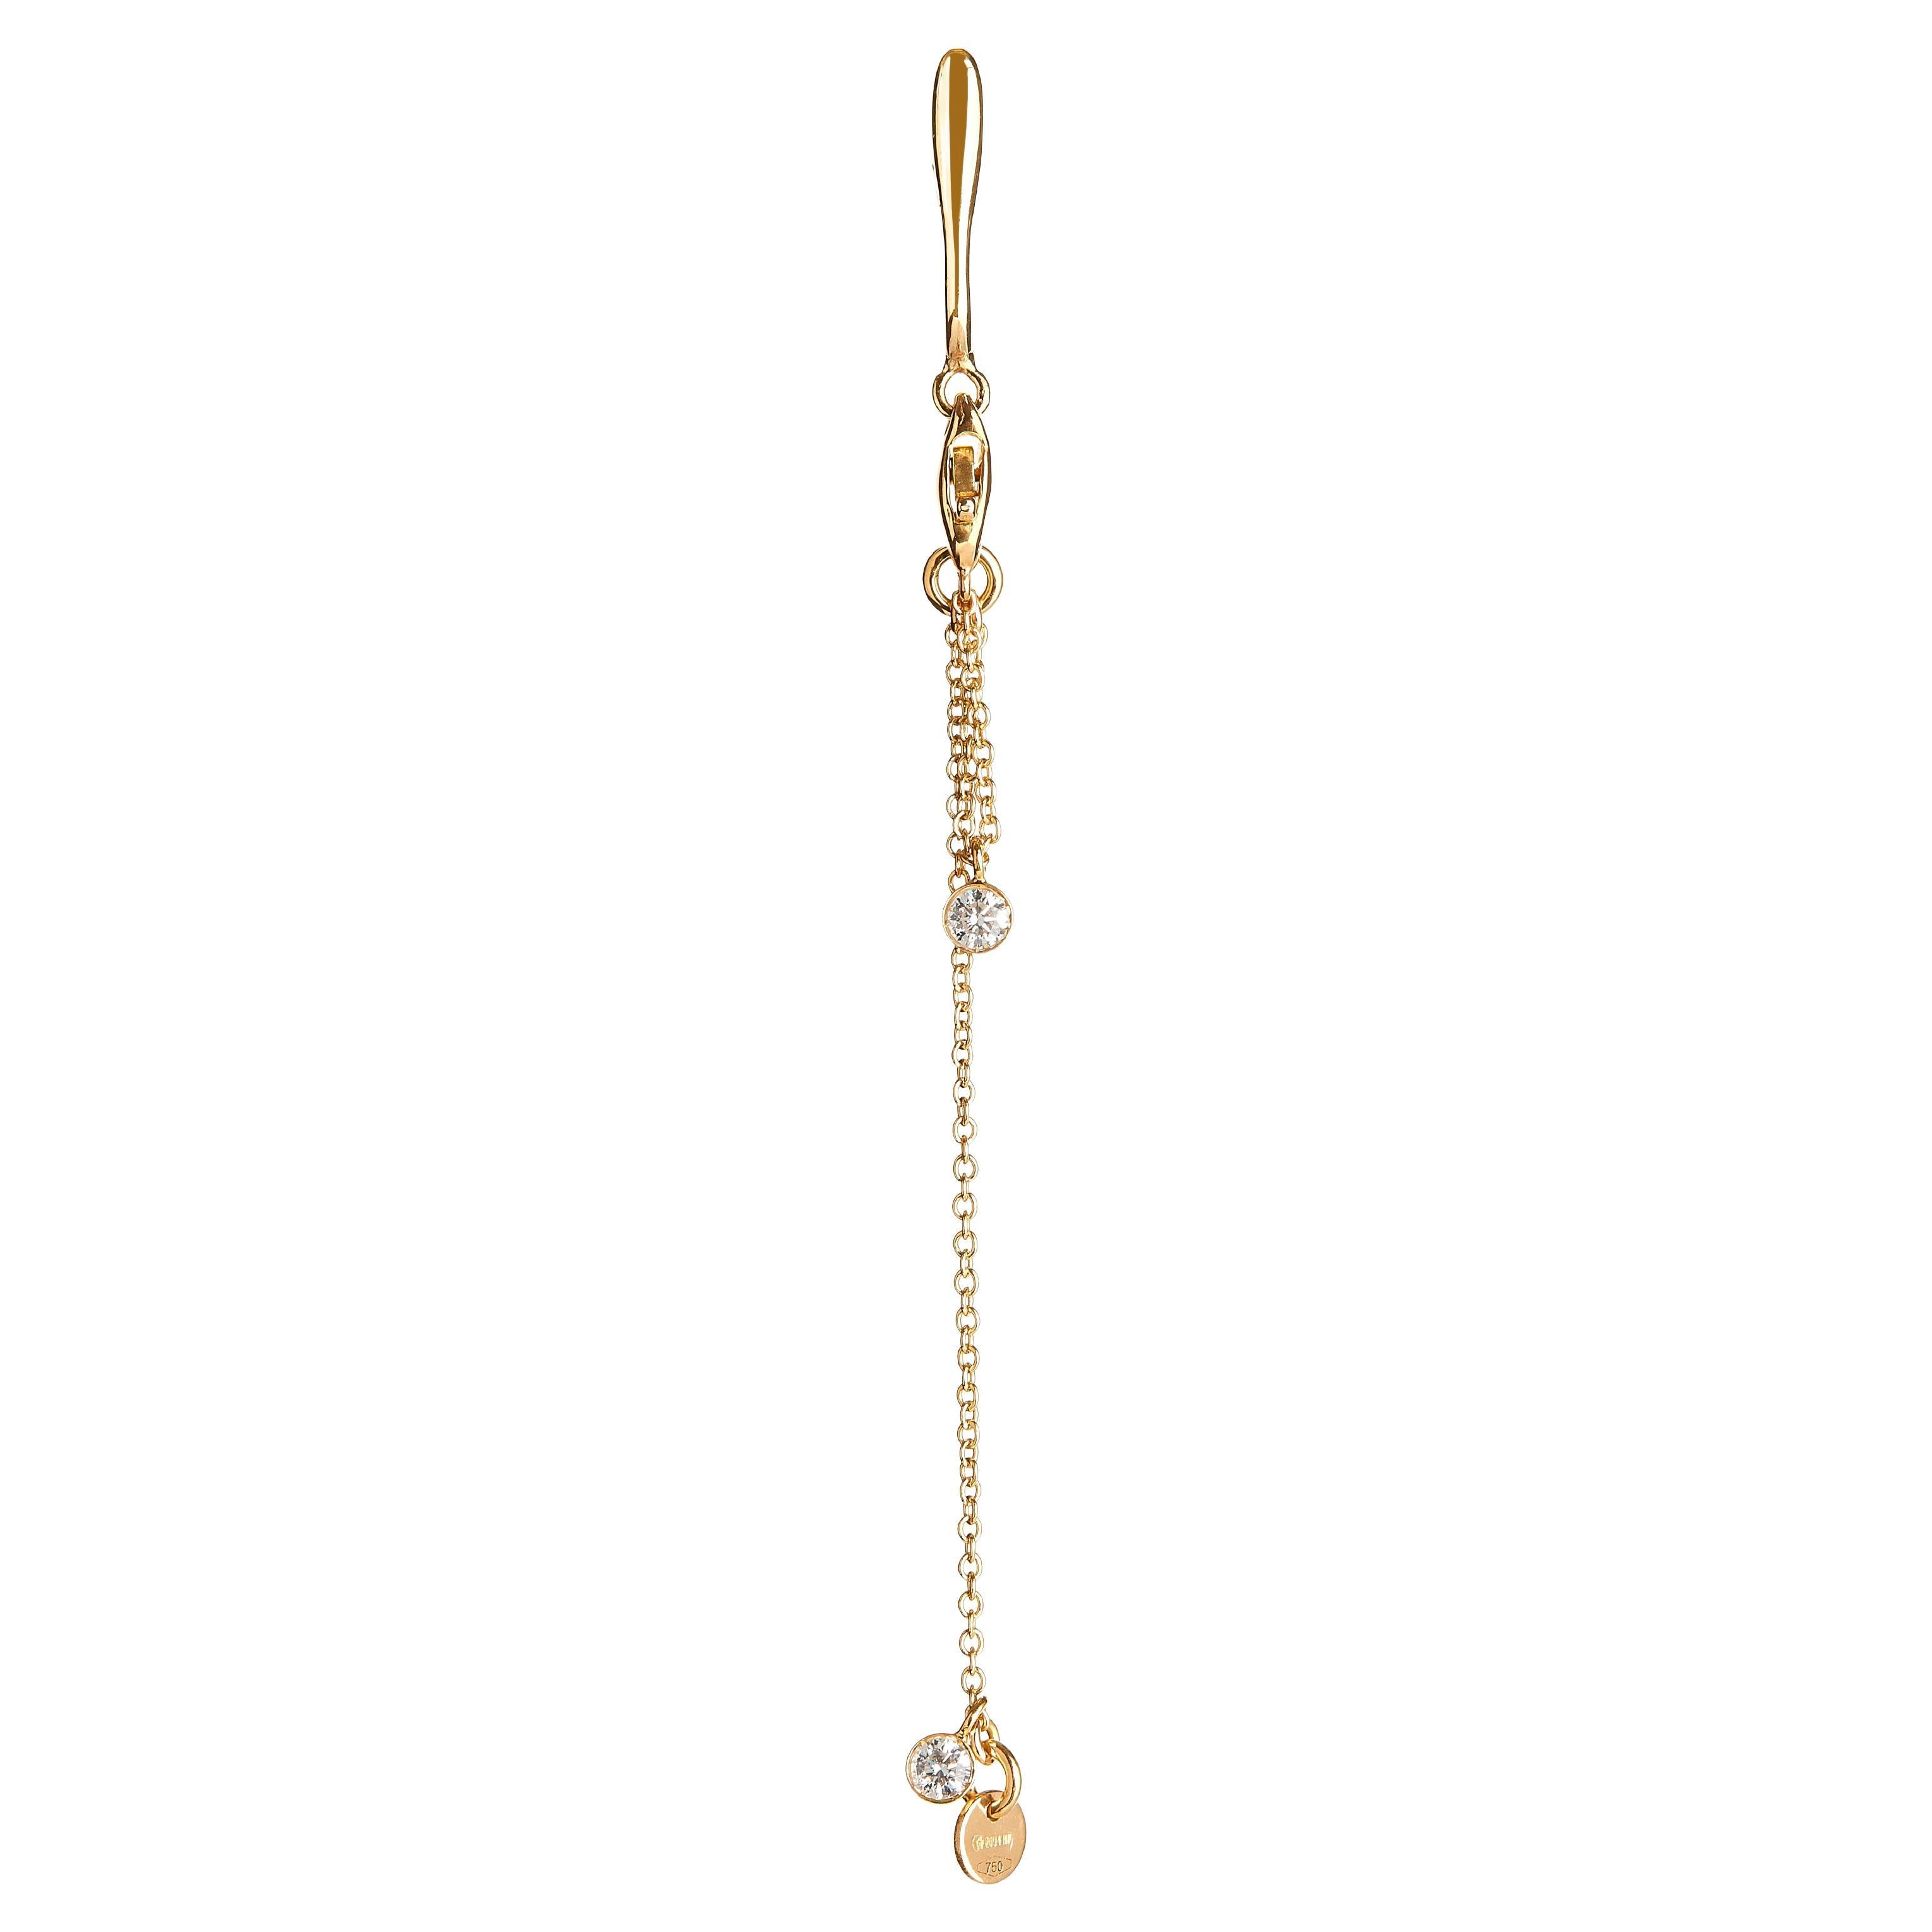 Nathalie Jean Contemporary 0.22 Carat Diamond Gold Pendant Drop Earring For Sale